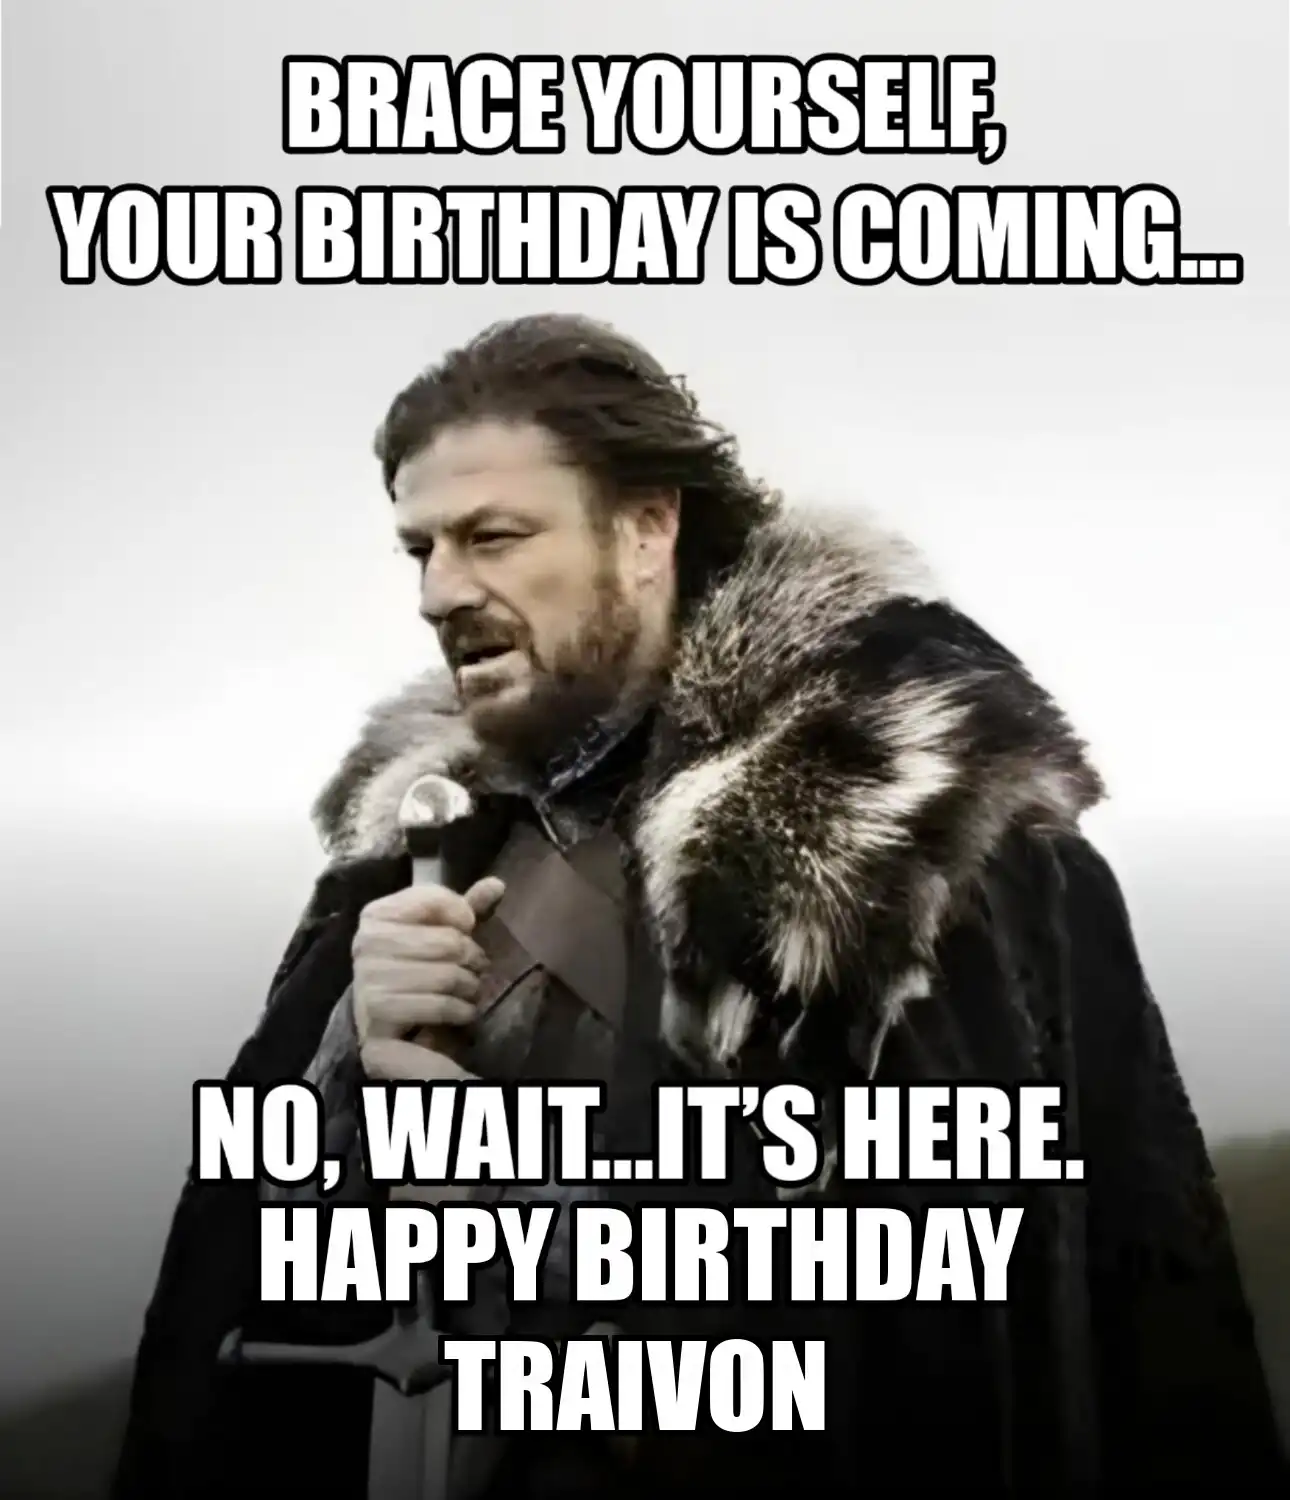 Happy Birthday Traivon Brace Yourself Your Birthday Is Coming Meme